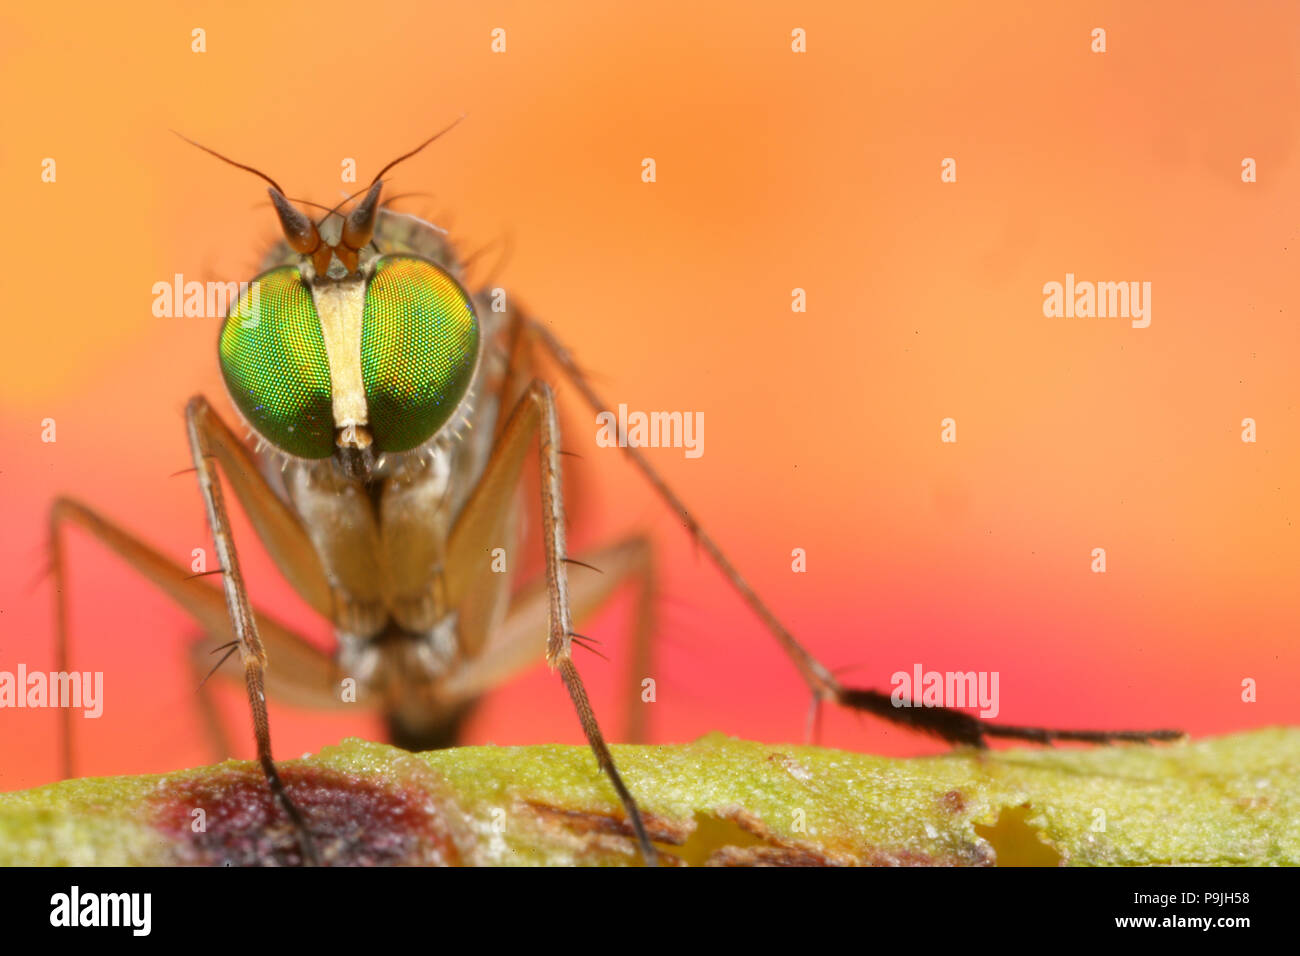 Monstruo de ojos verdes fotografías e imágenes de alta resolución - Alamy